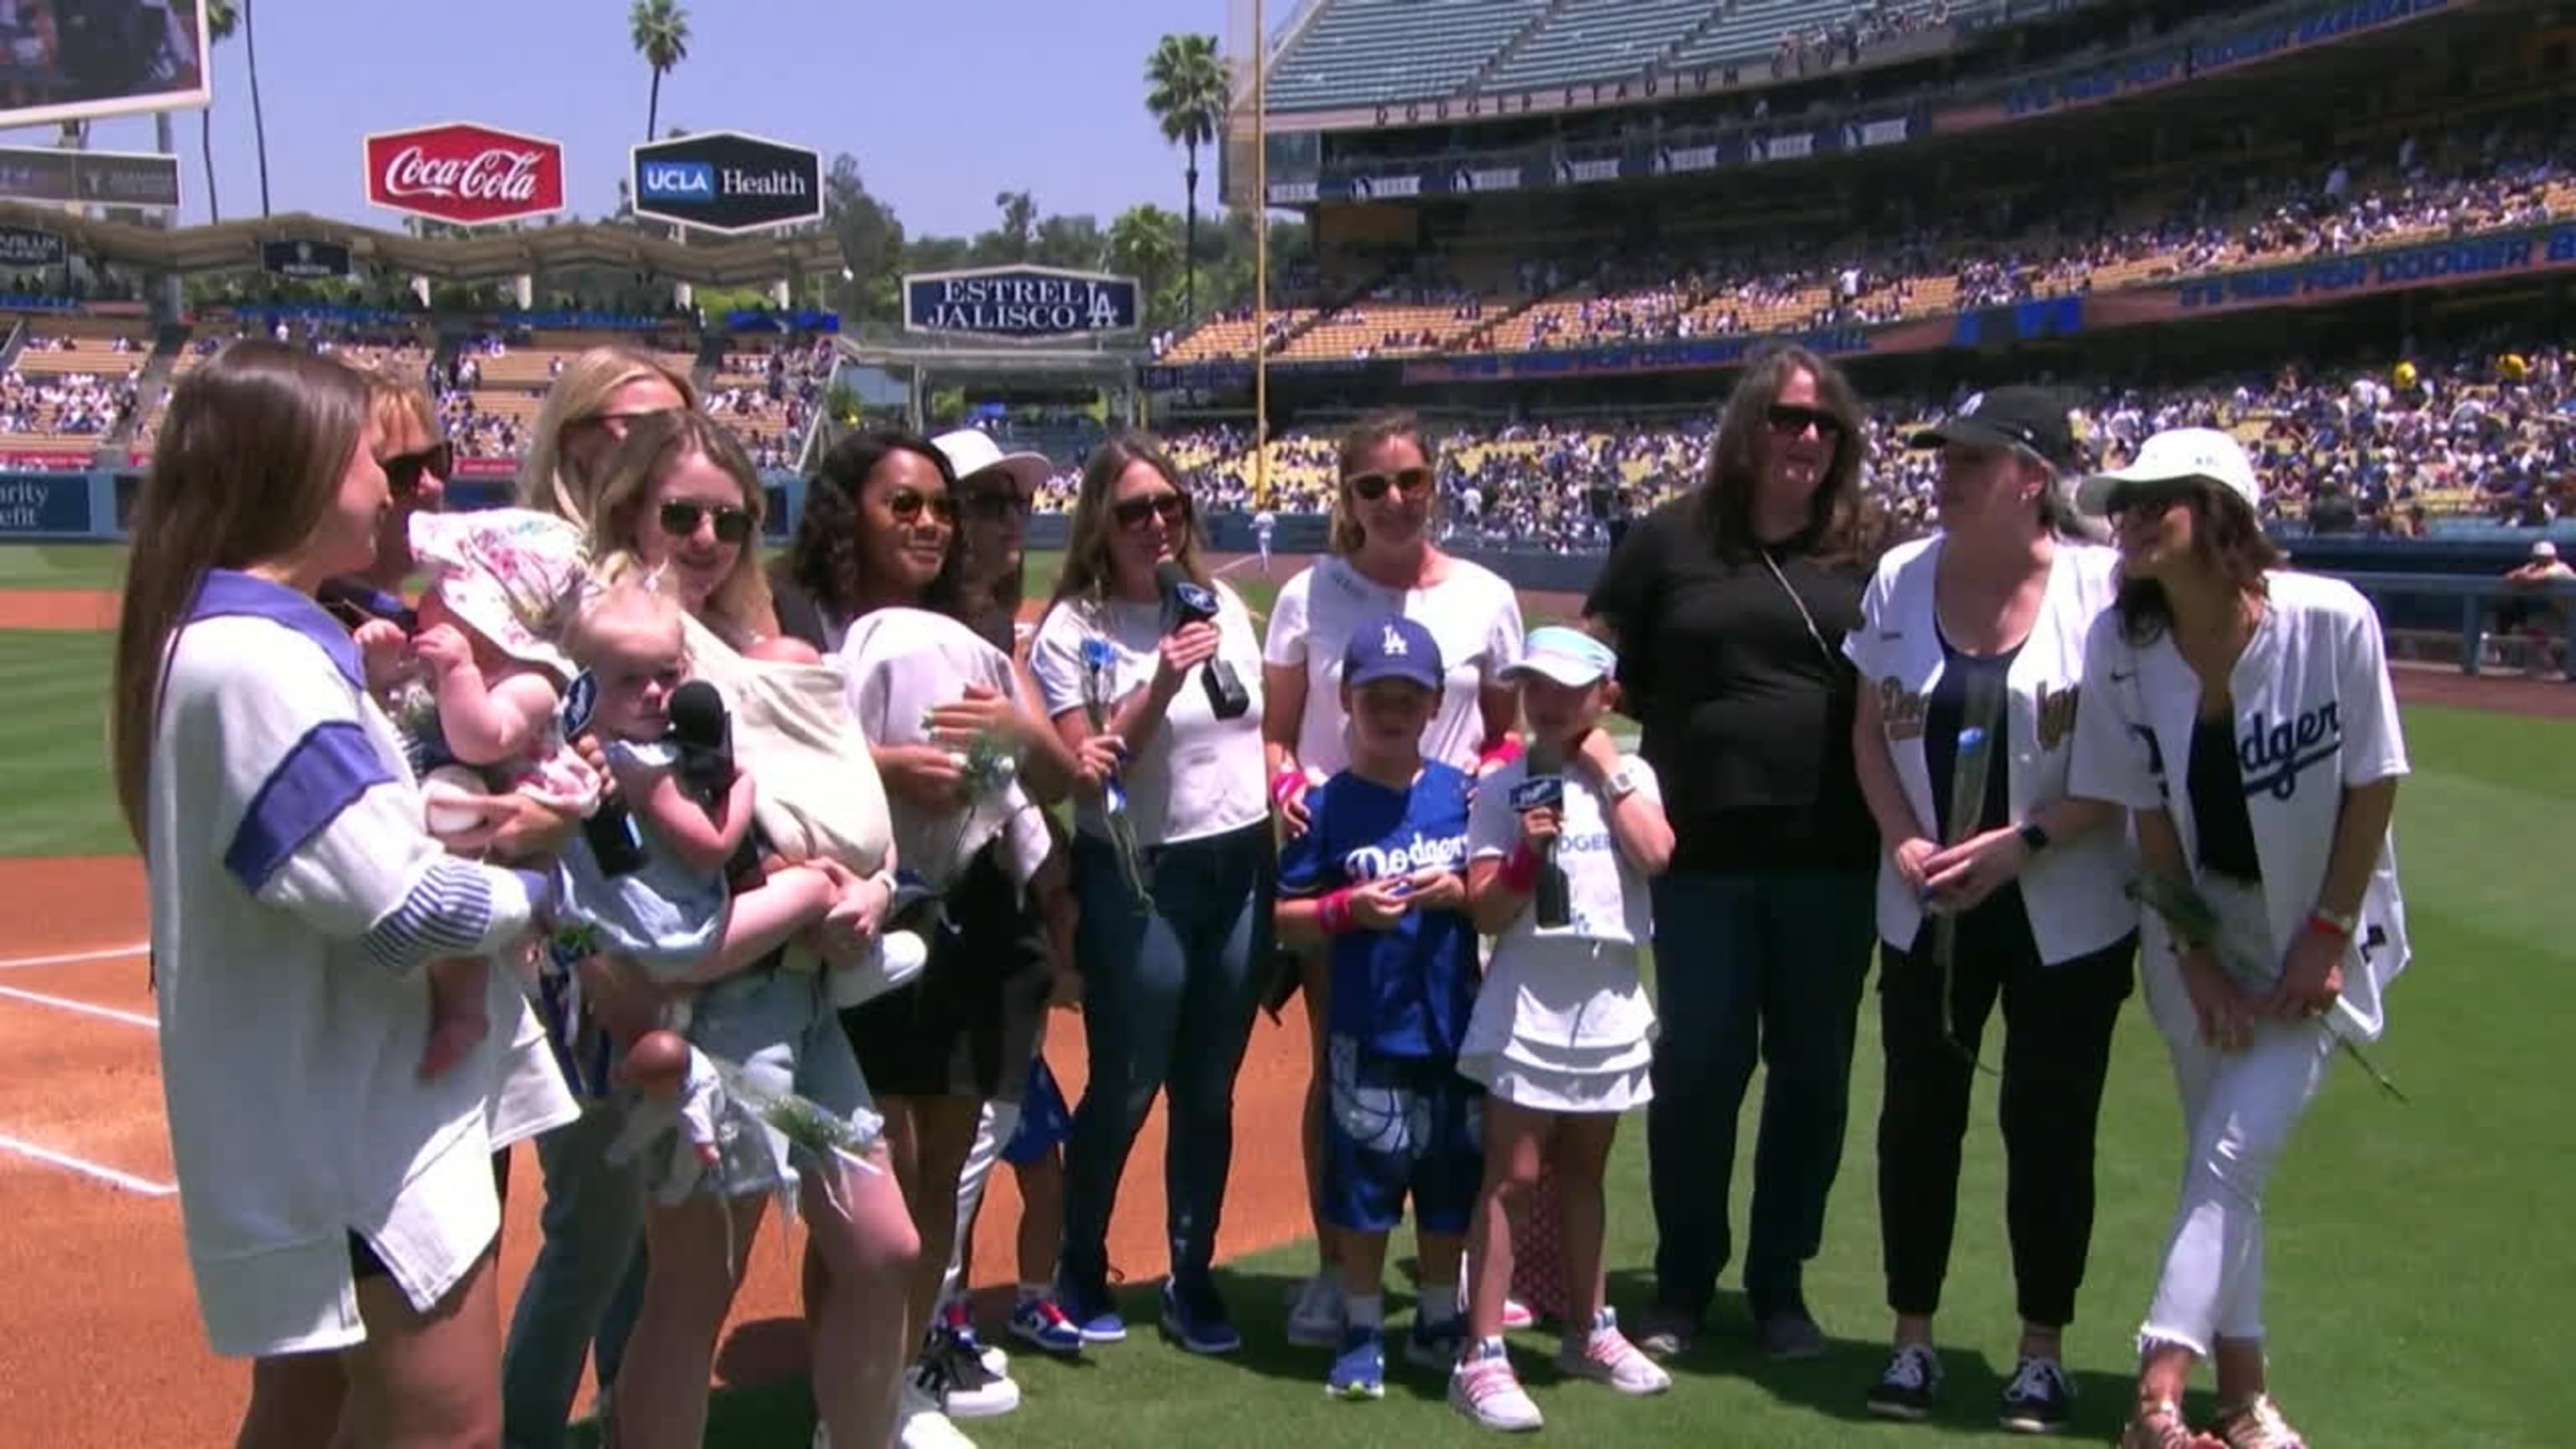 MLB stars celebrate Mother's Day